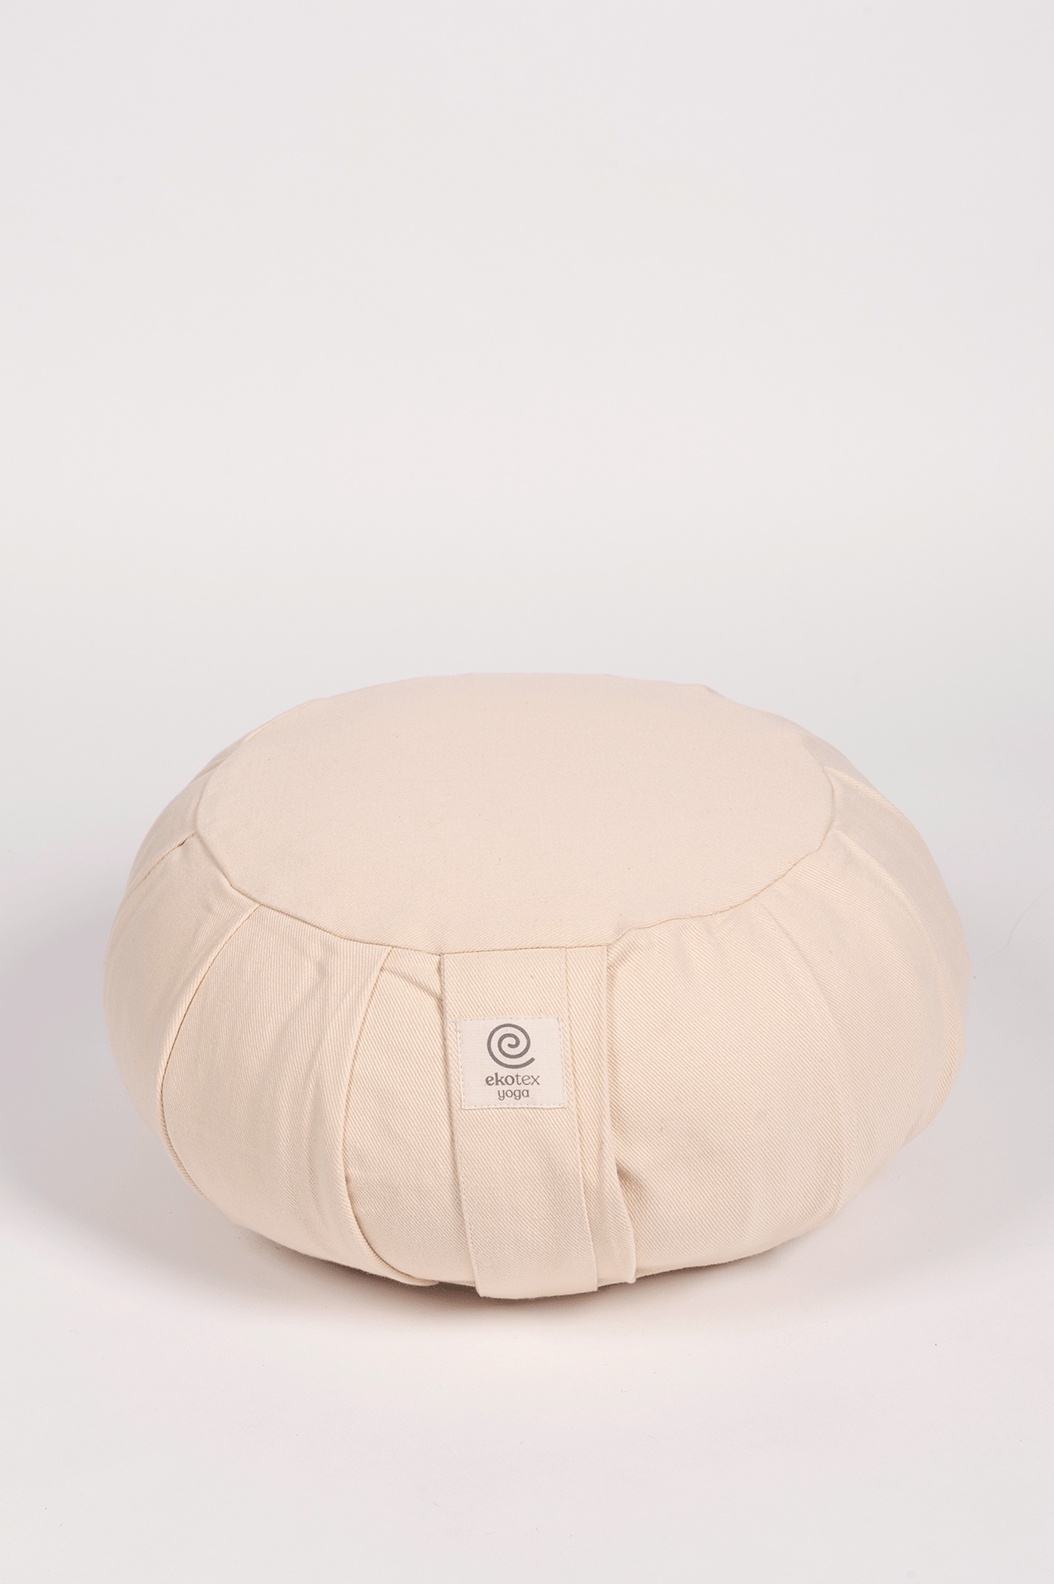 Meditation Cushions Natural Round Zafu Cushion Cover